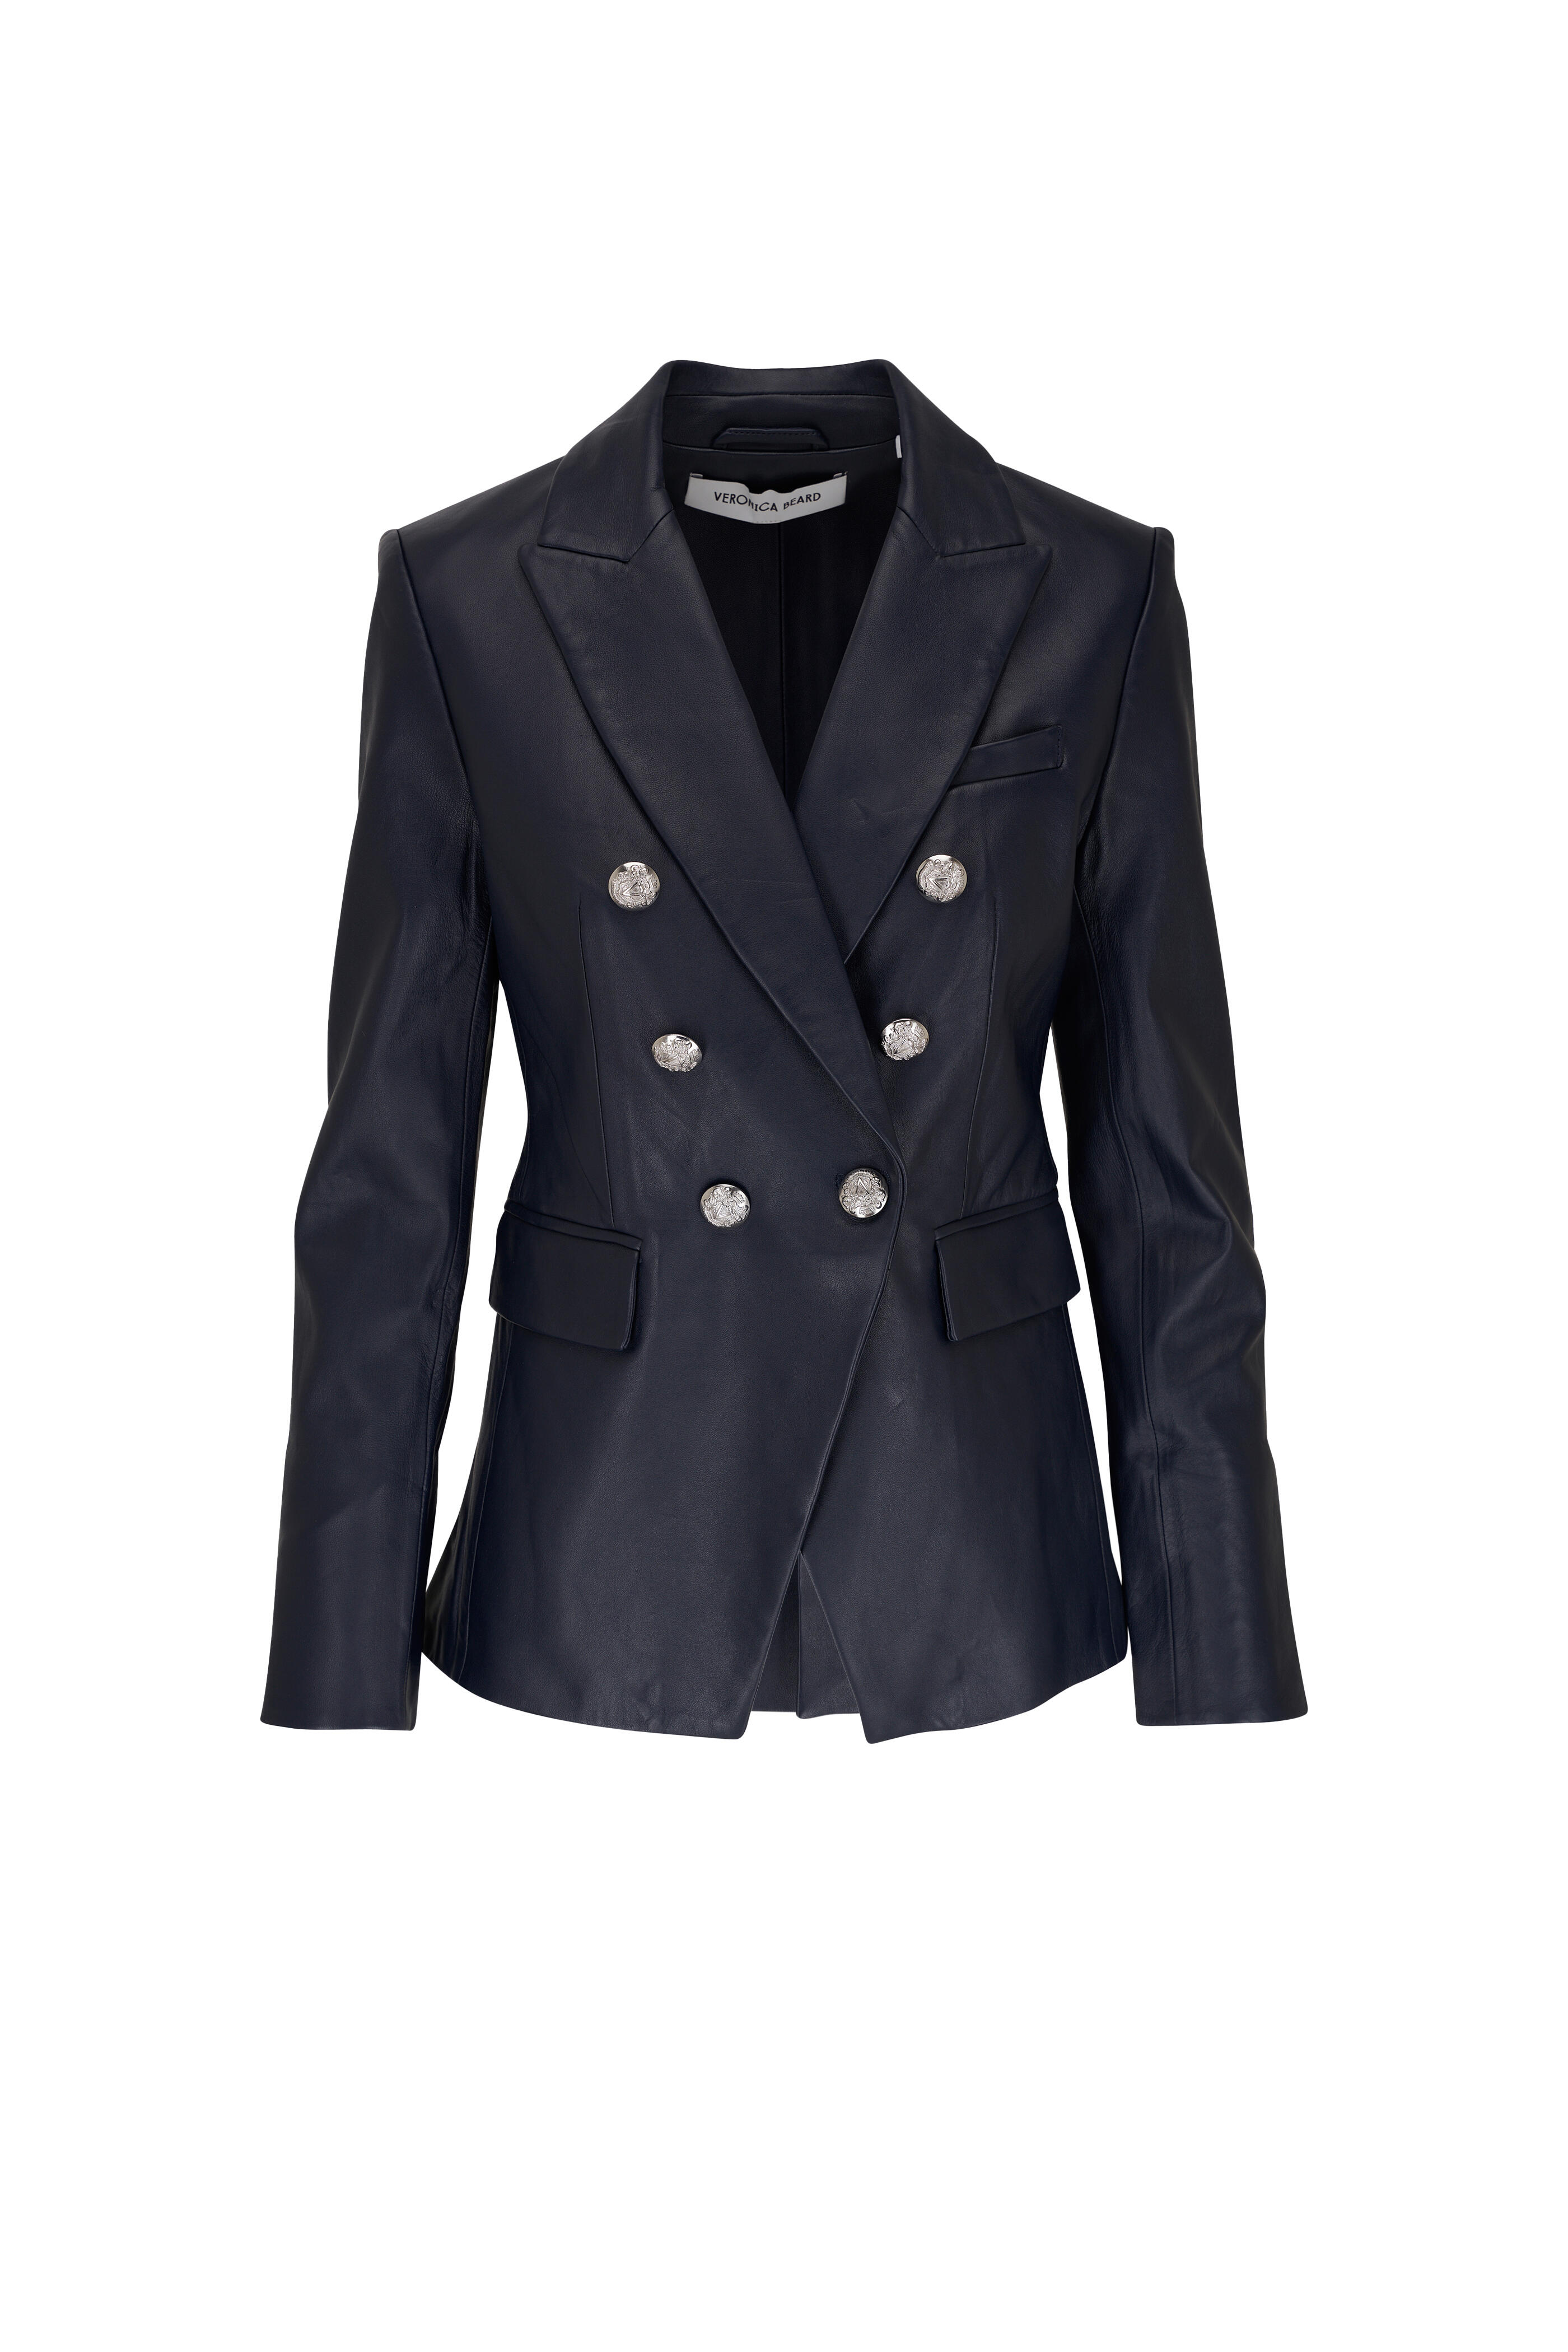 Veronica Beard - Miller Navy Leather Dickey Jacket